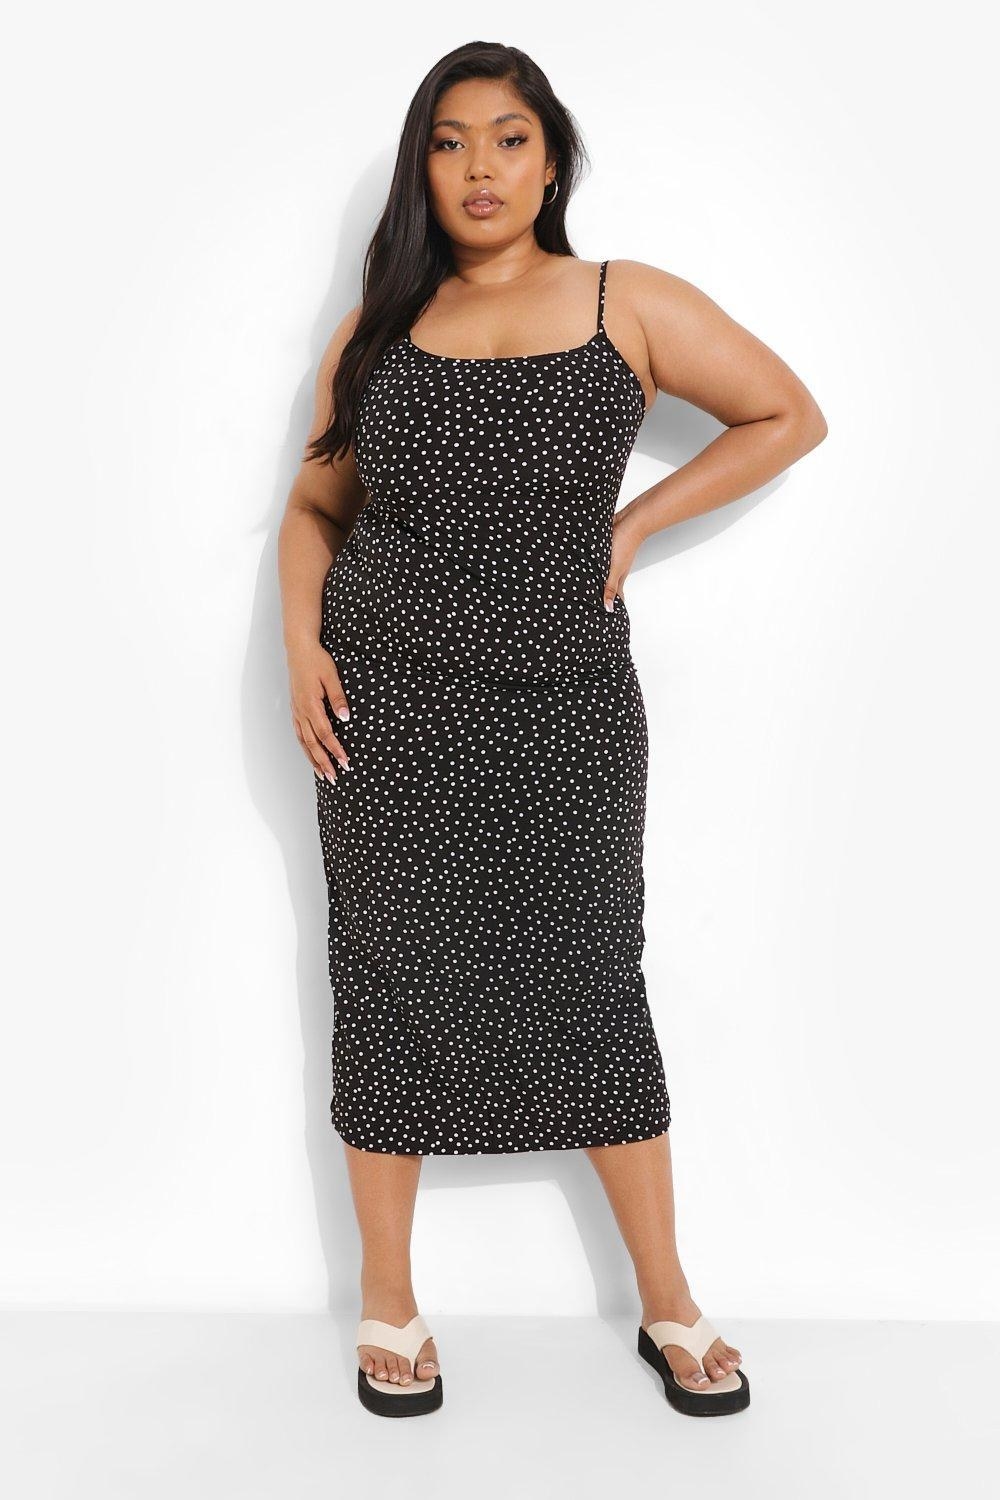 Model wearing black polka dot dress